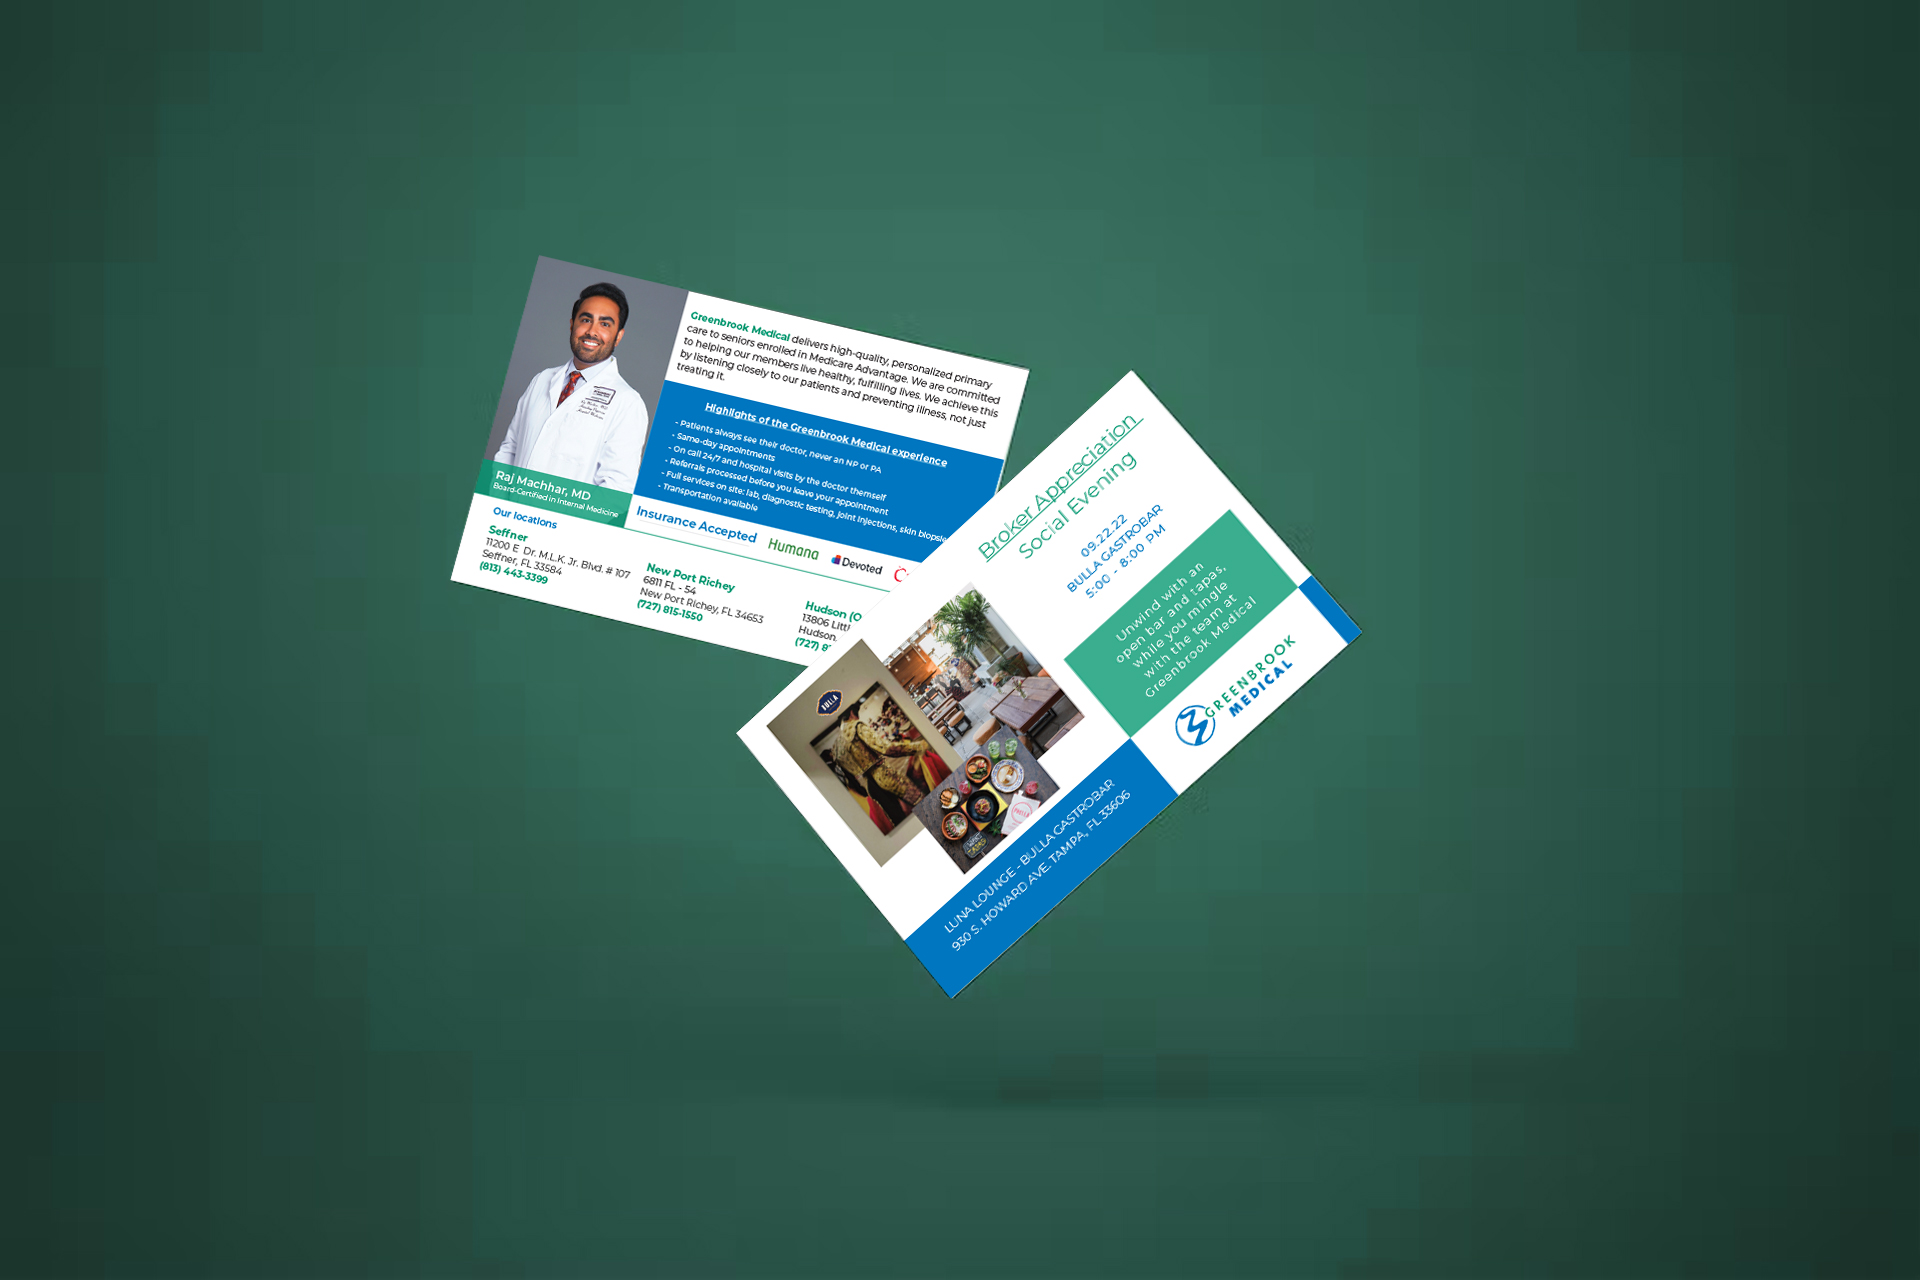 Promotion card featuring Dr Raj Muchhar